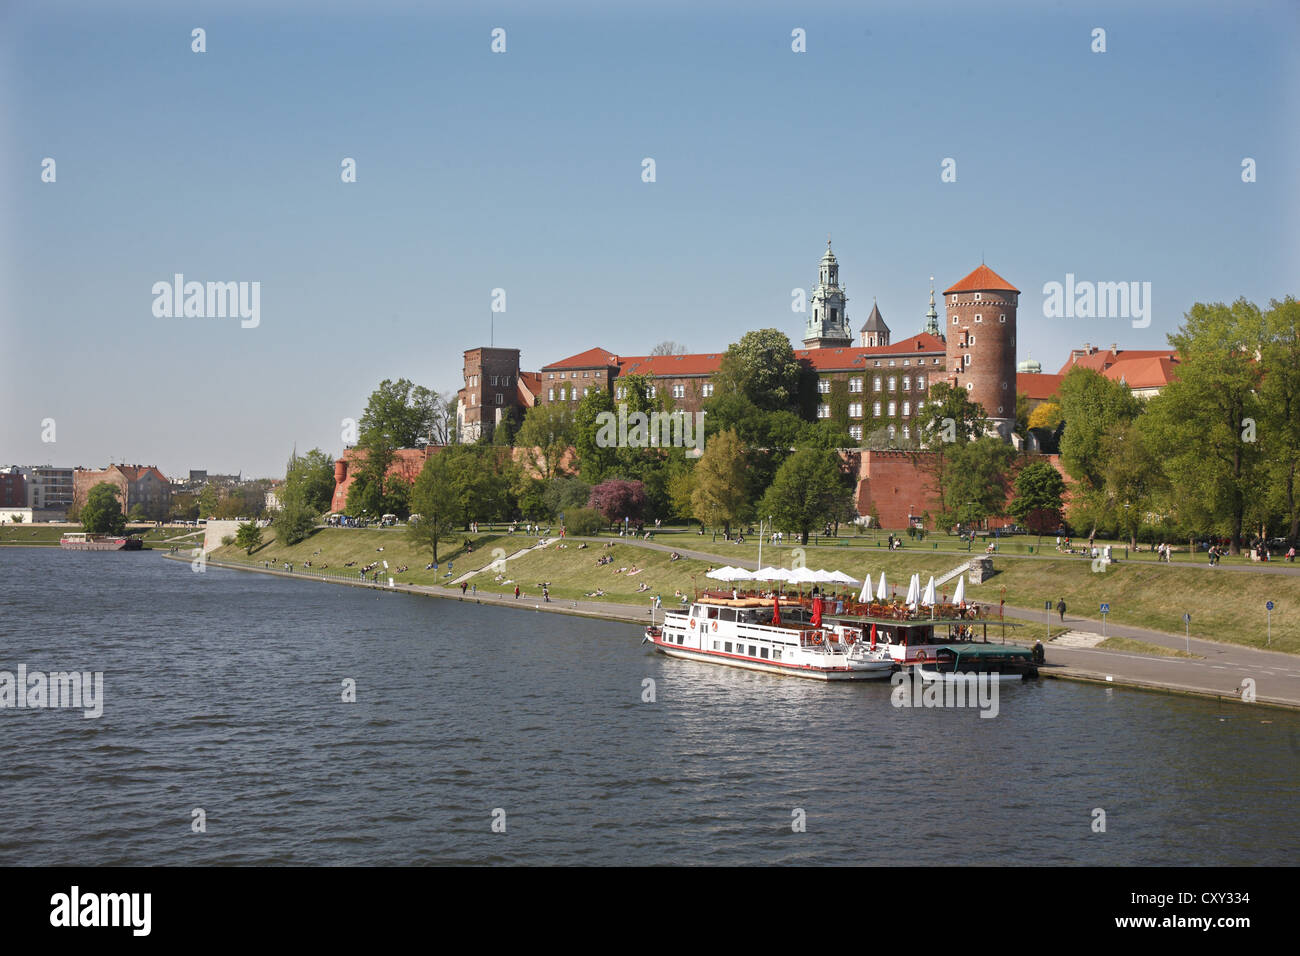 Ausflugsschiff auf dem Vistula Fluß, Wawel, Krakau, Polen, Europa Stockfoto